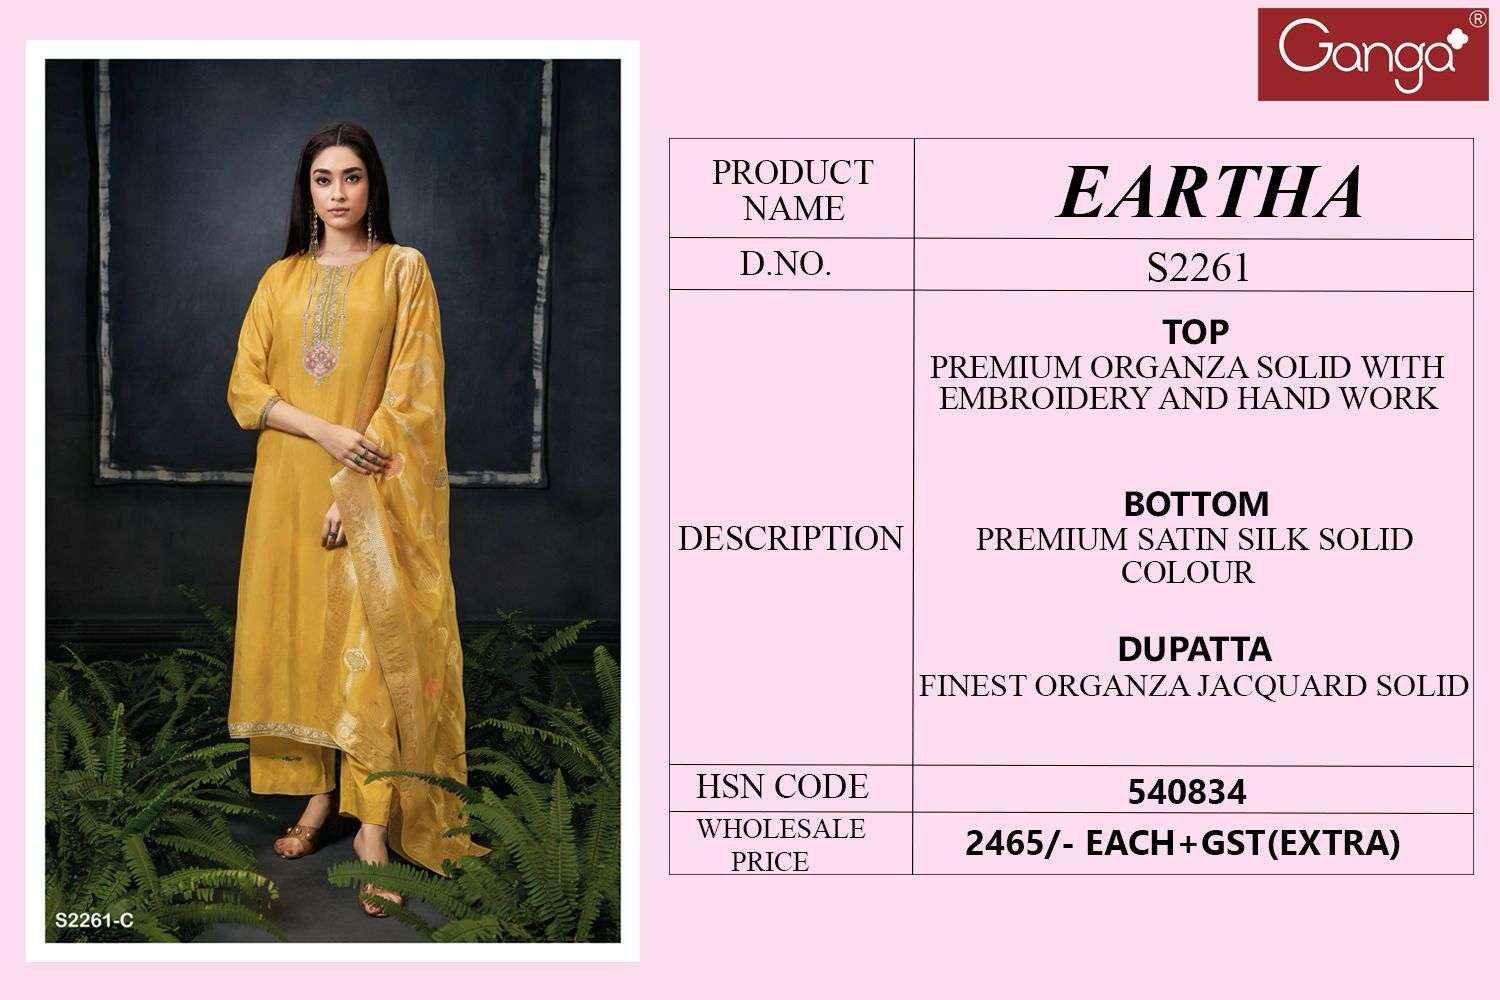 Ganga Eartha 2261 Premium Designs Organza Wedding Wear Ladies Suit Dealers (3 pcs catalog )